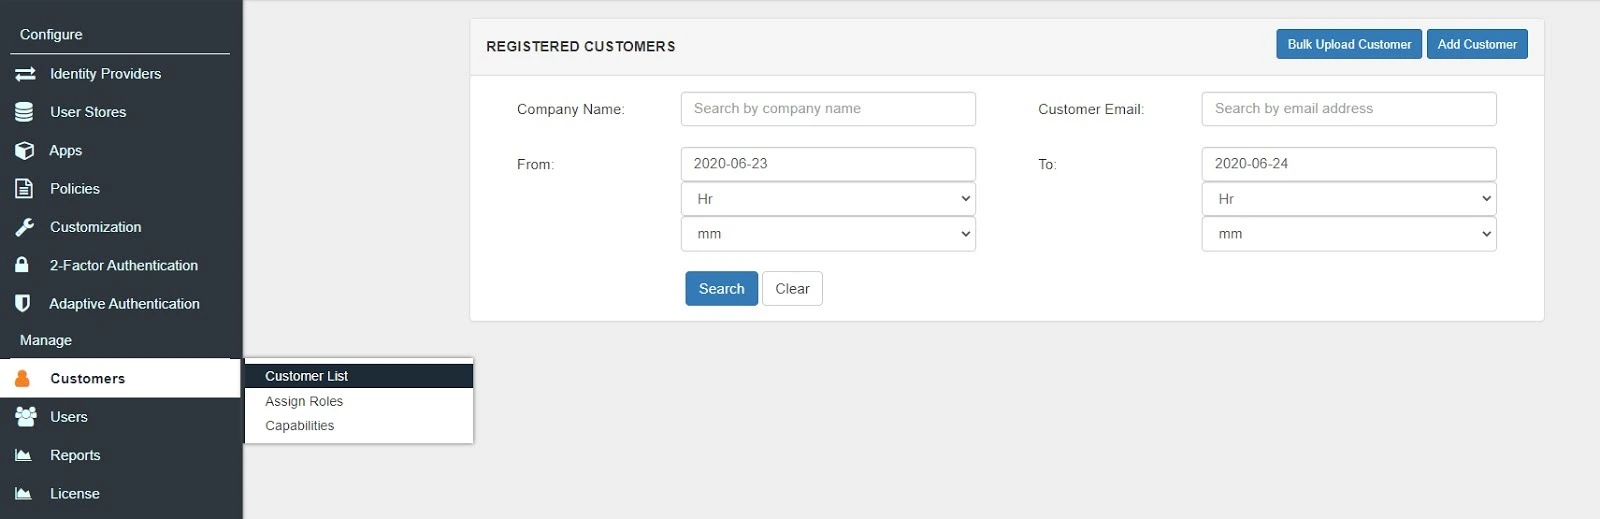 Configure Customer List